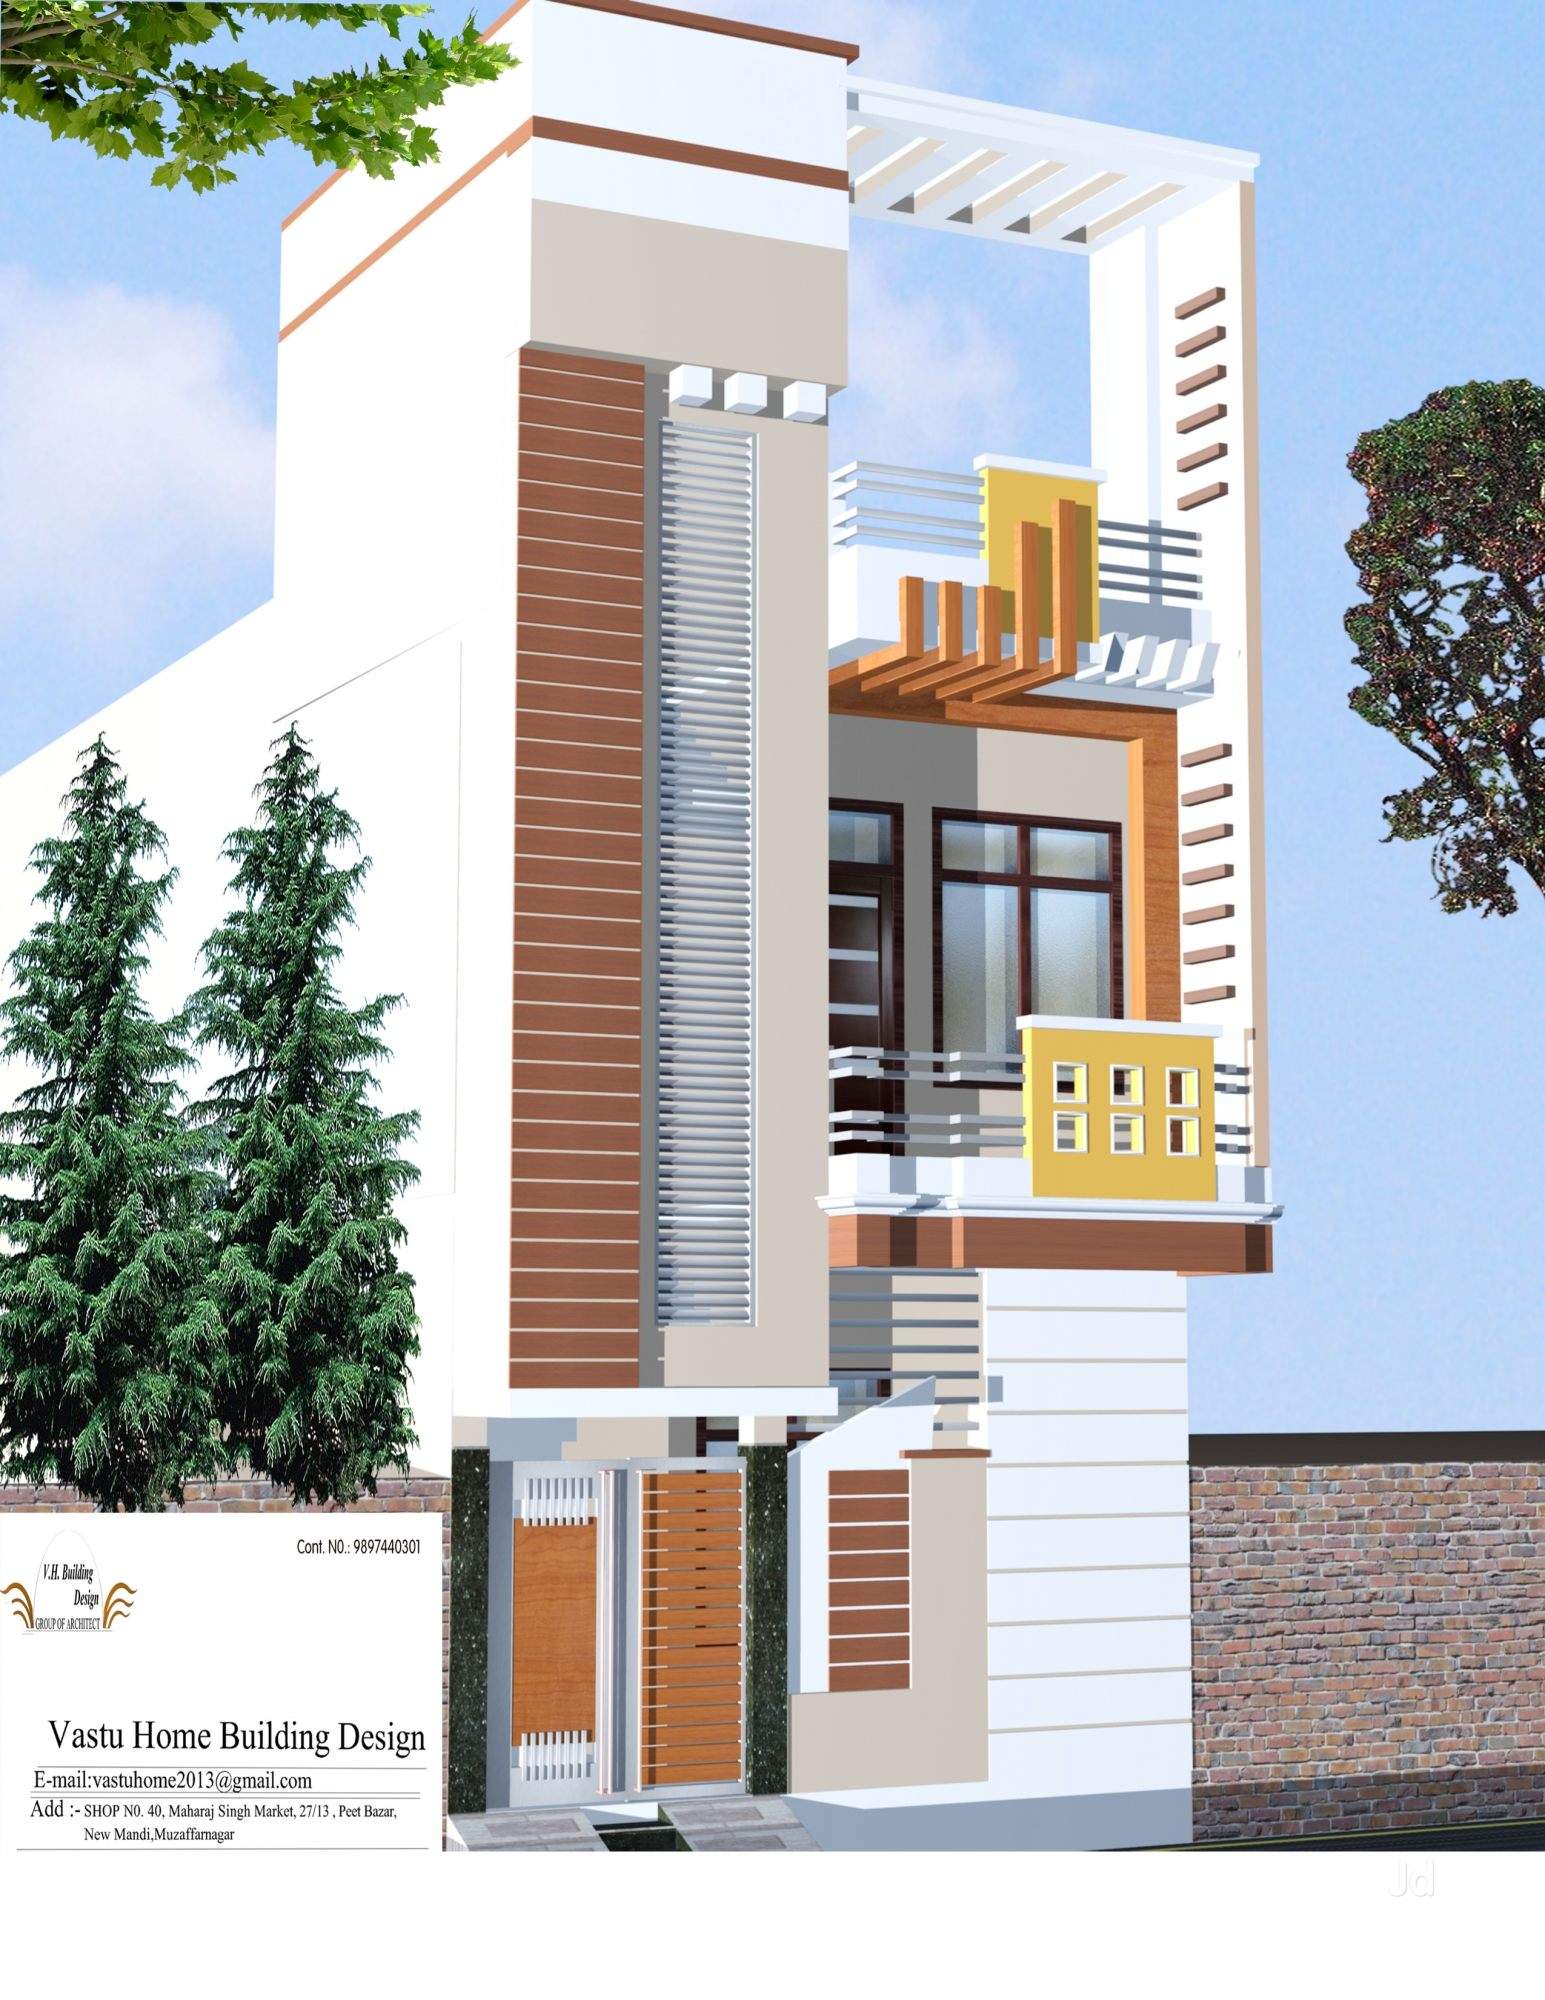 Vastu Home Building Design, Muzaffar Nagar City - Vaastu Home Building  Design - Architects in Muzaffarnagar - Justdial